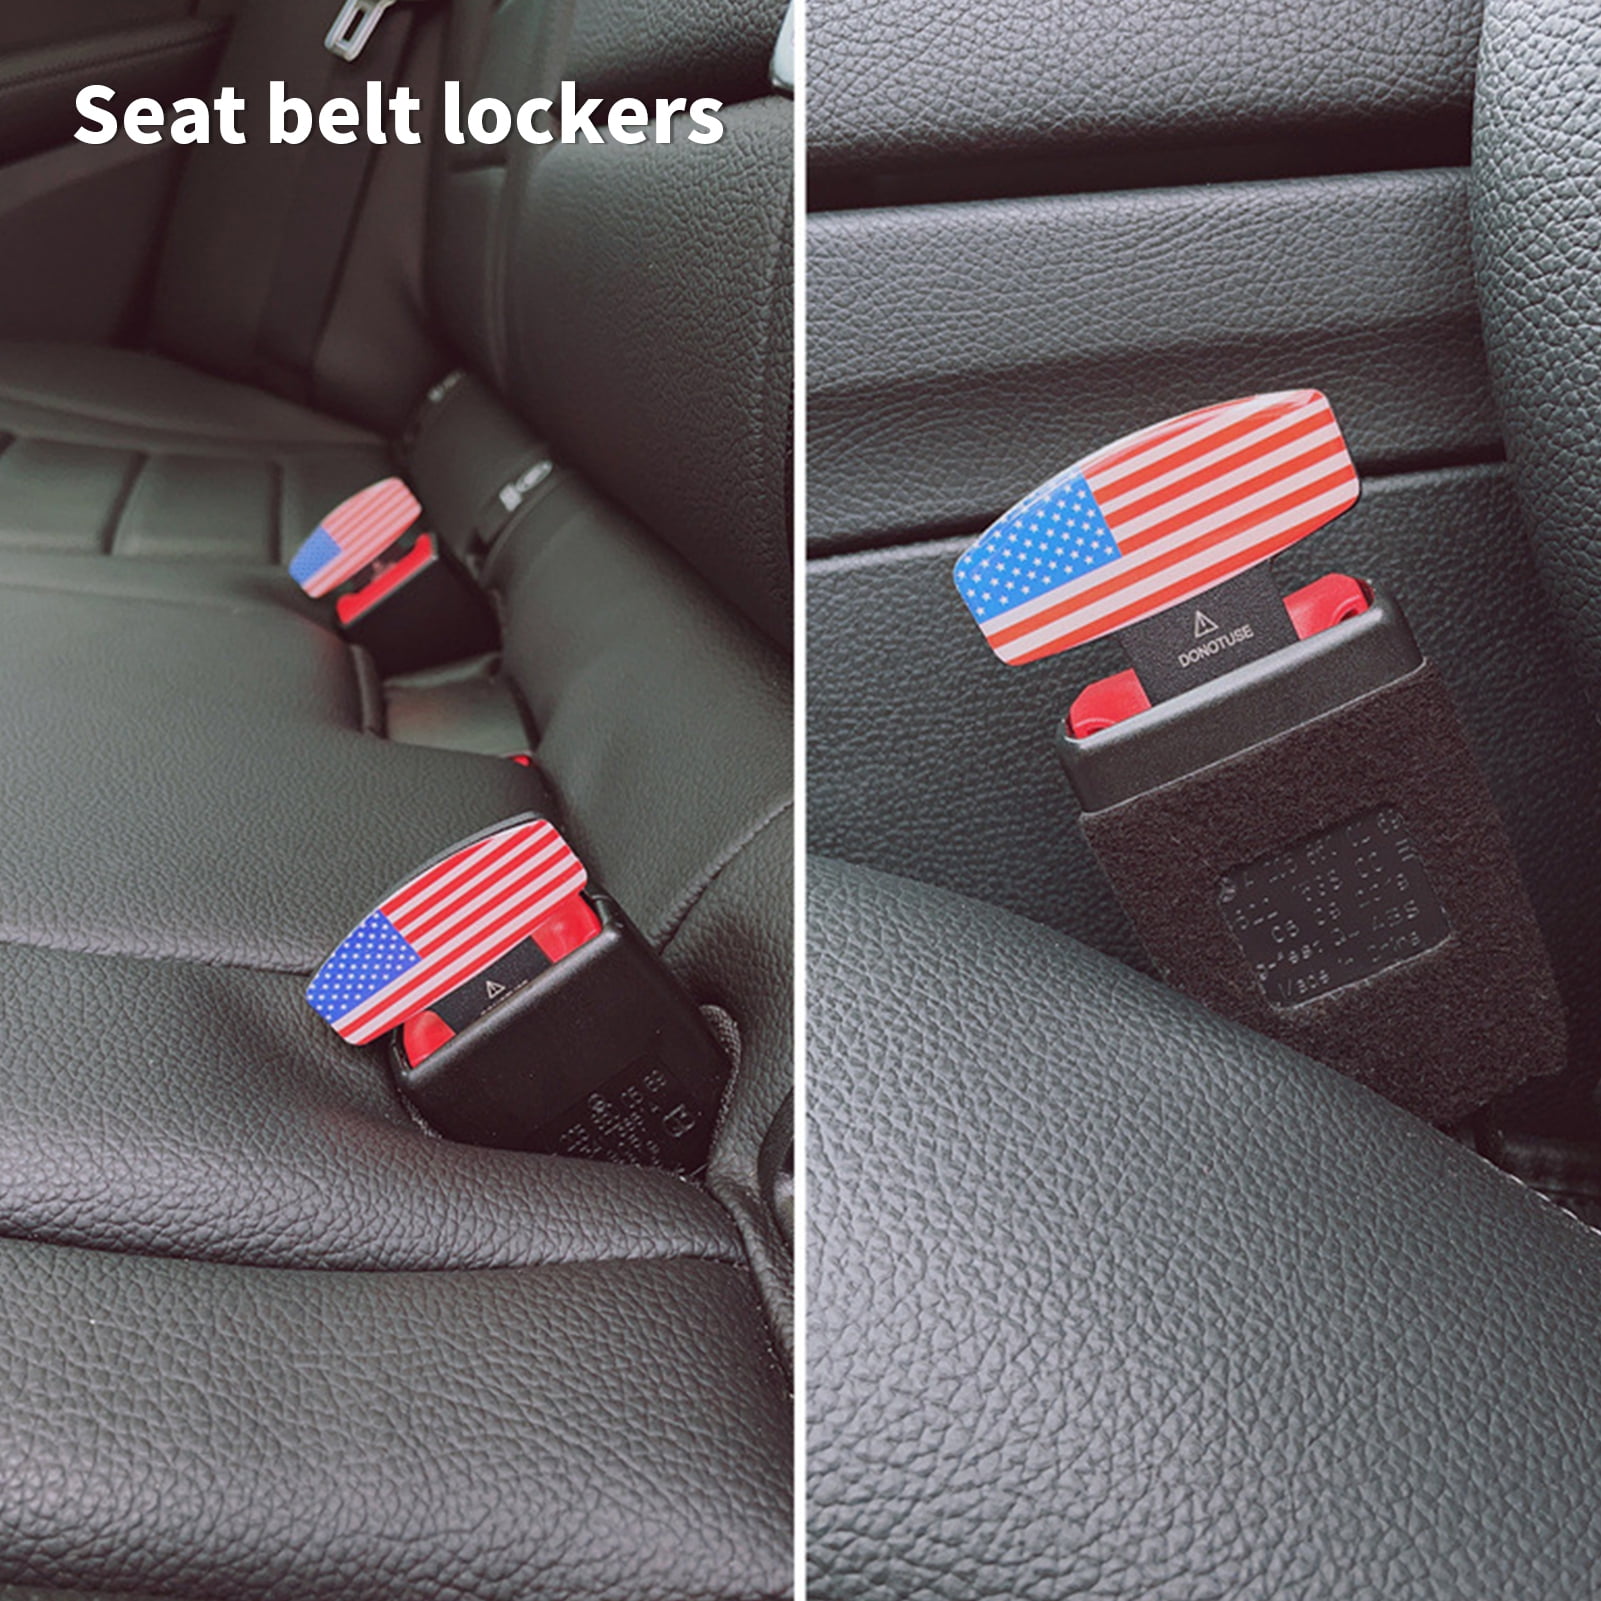 HTLAKIKJ 2 Pieces Silicone Belt Lock Holder, Seat Belt, Buckle Aid